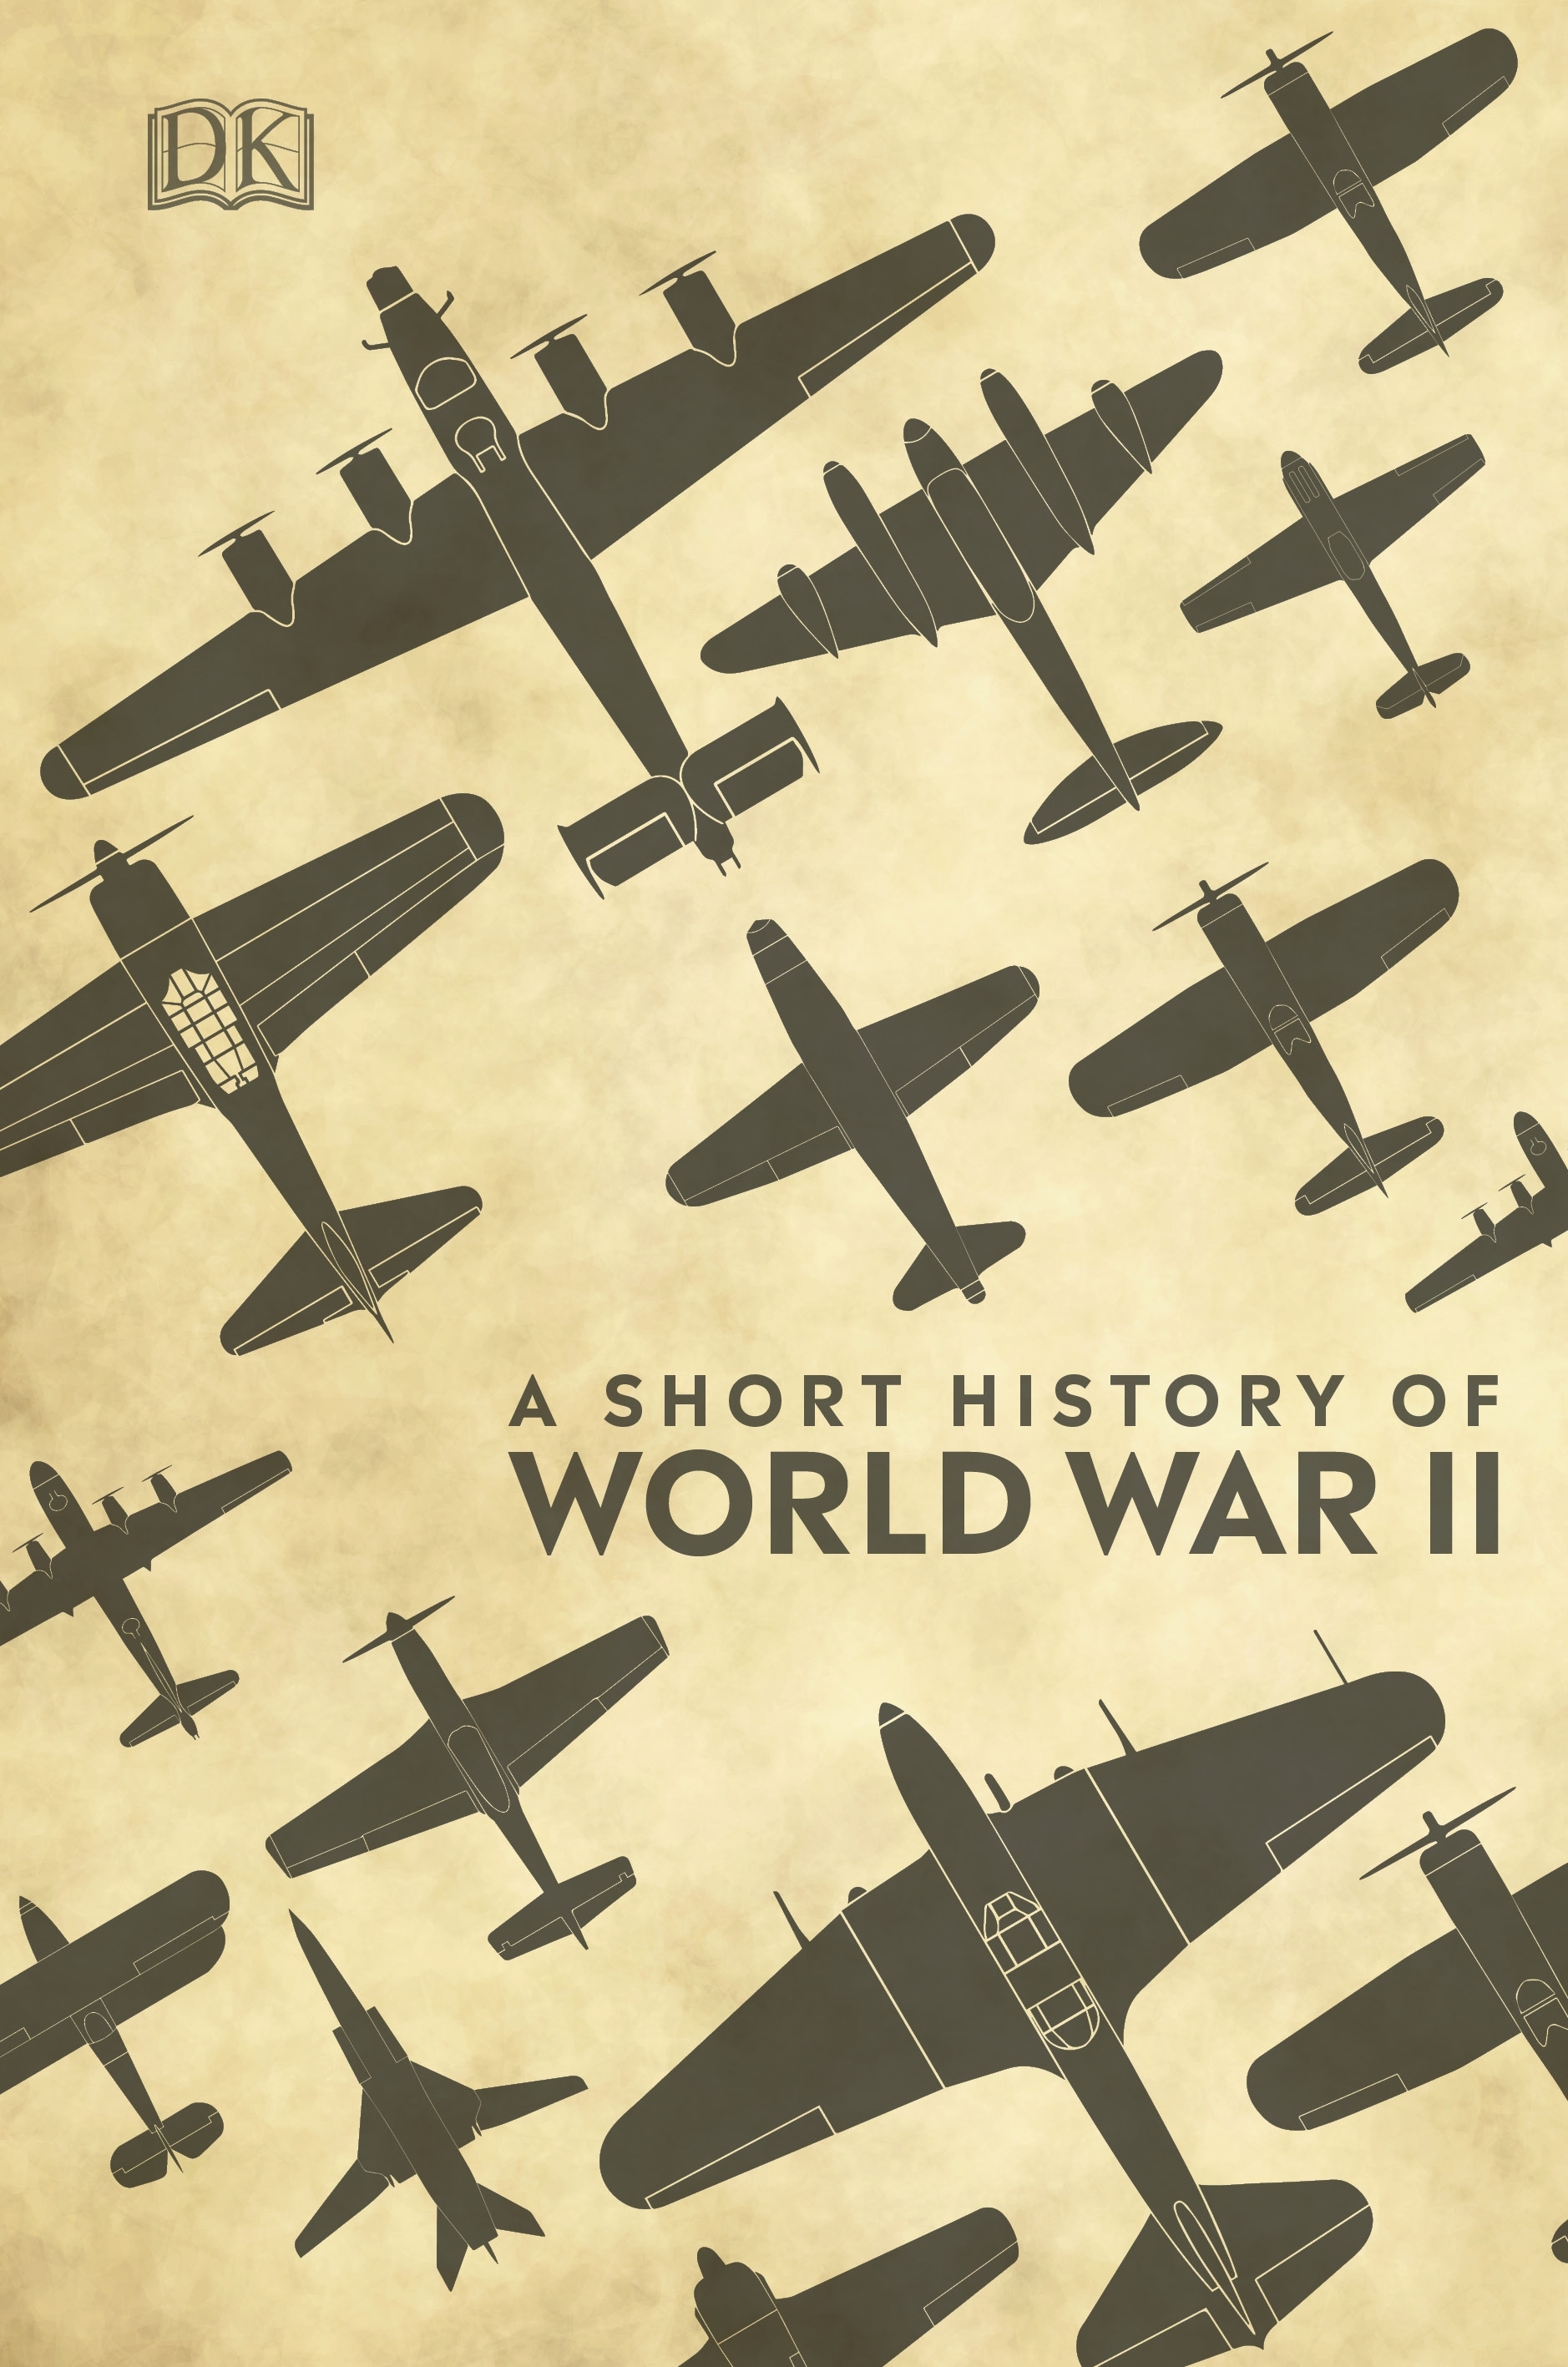 A Short History Of World War Ii By Dk Penguin Books Australia